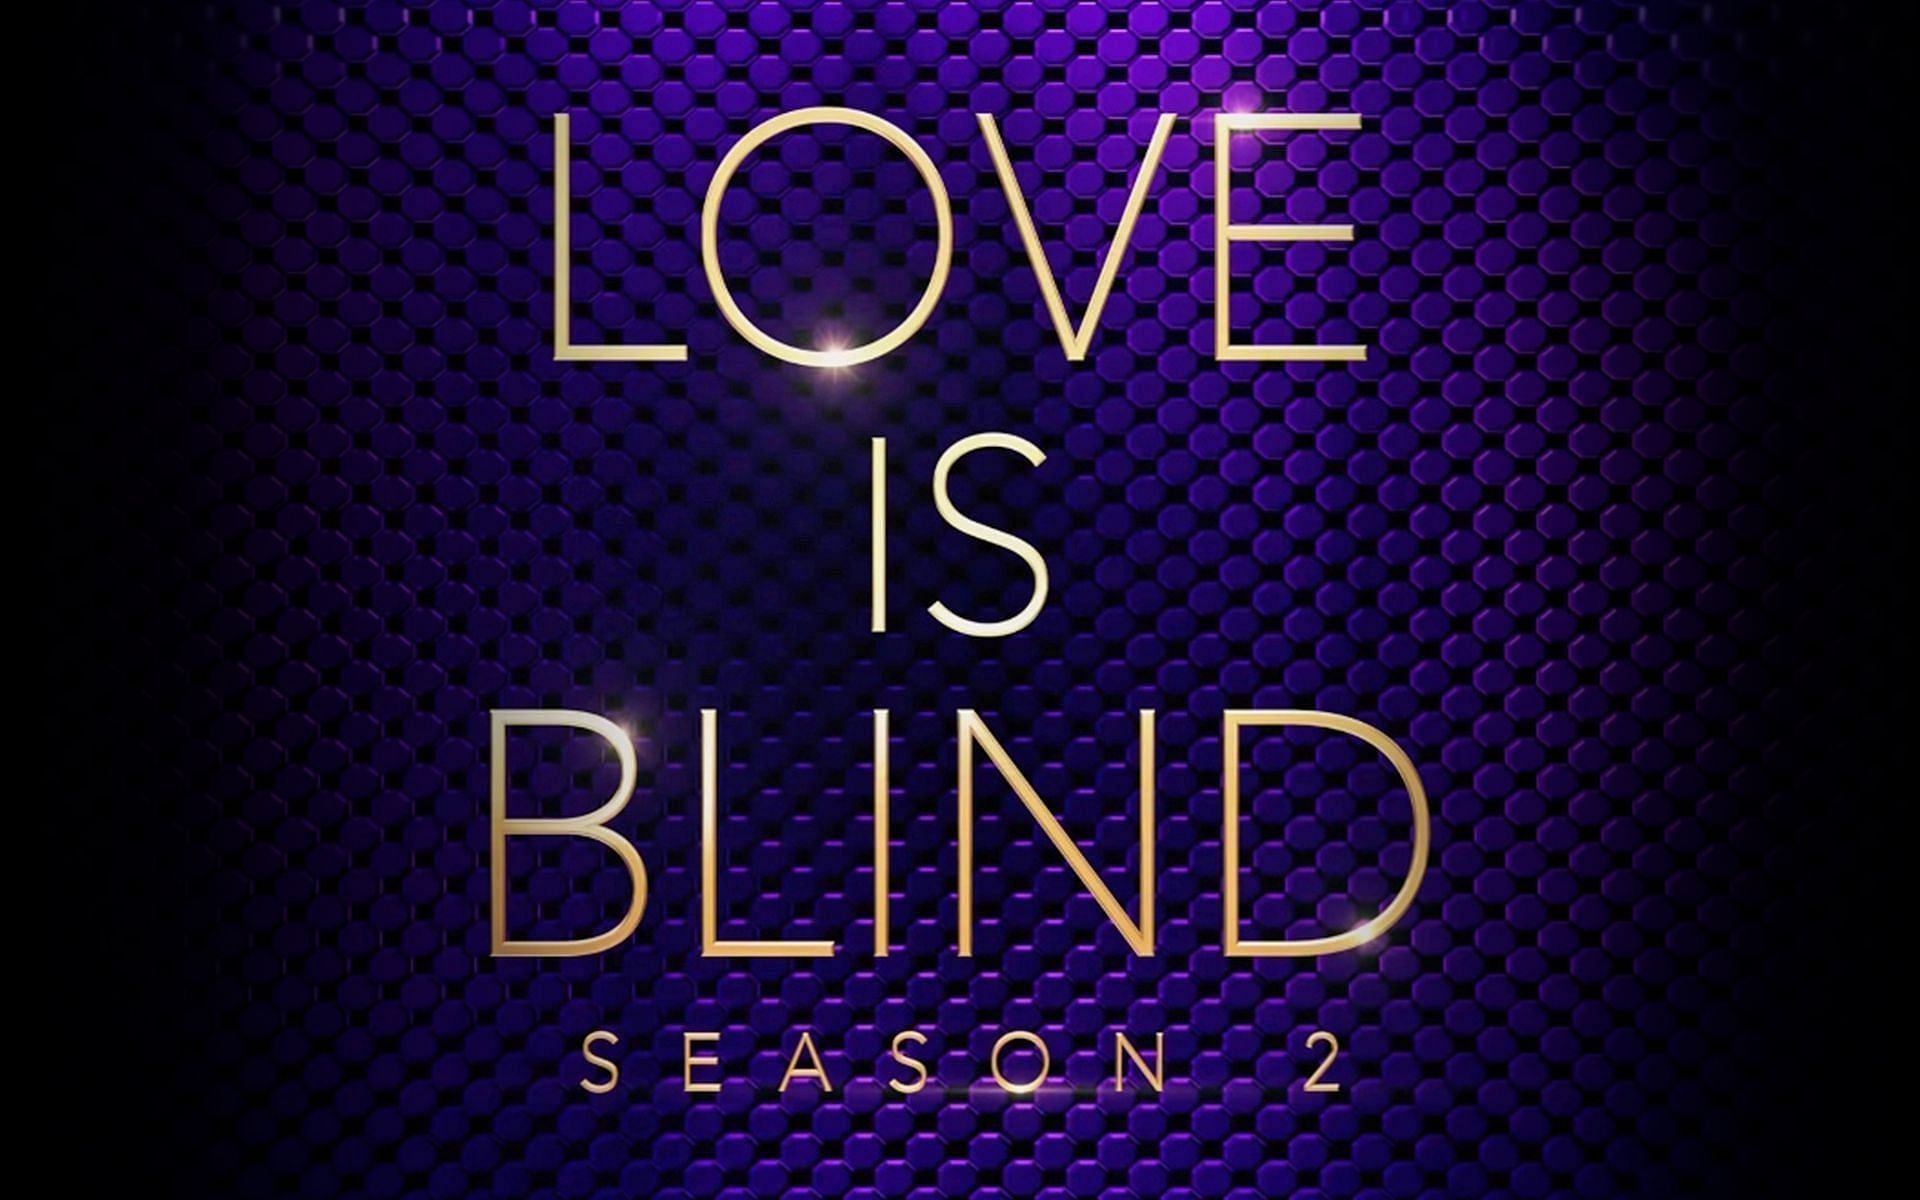 Six couples got engaged on Love is Blind Season 2 (Image via Facebook)